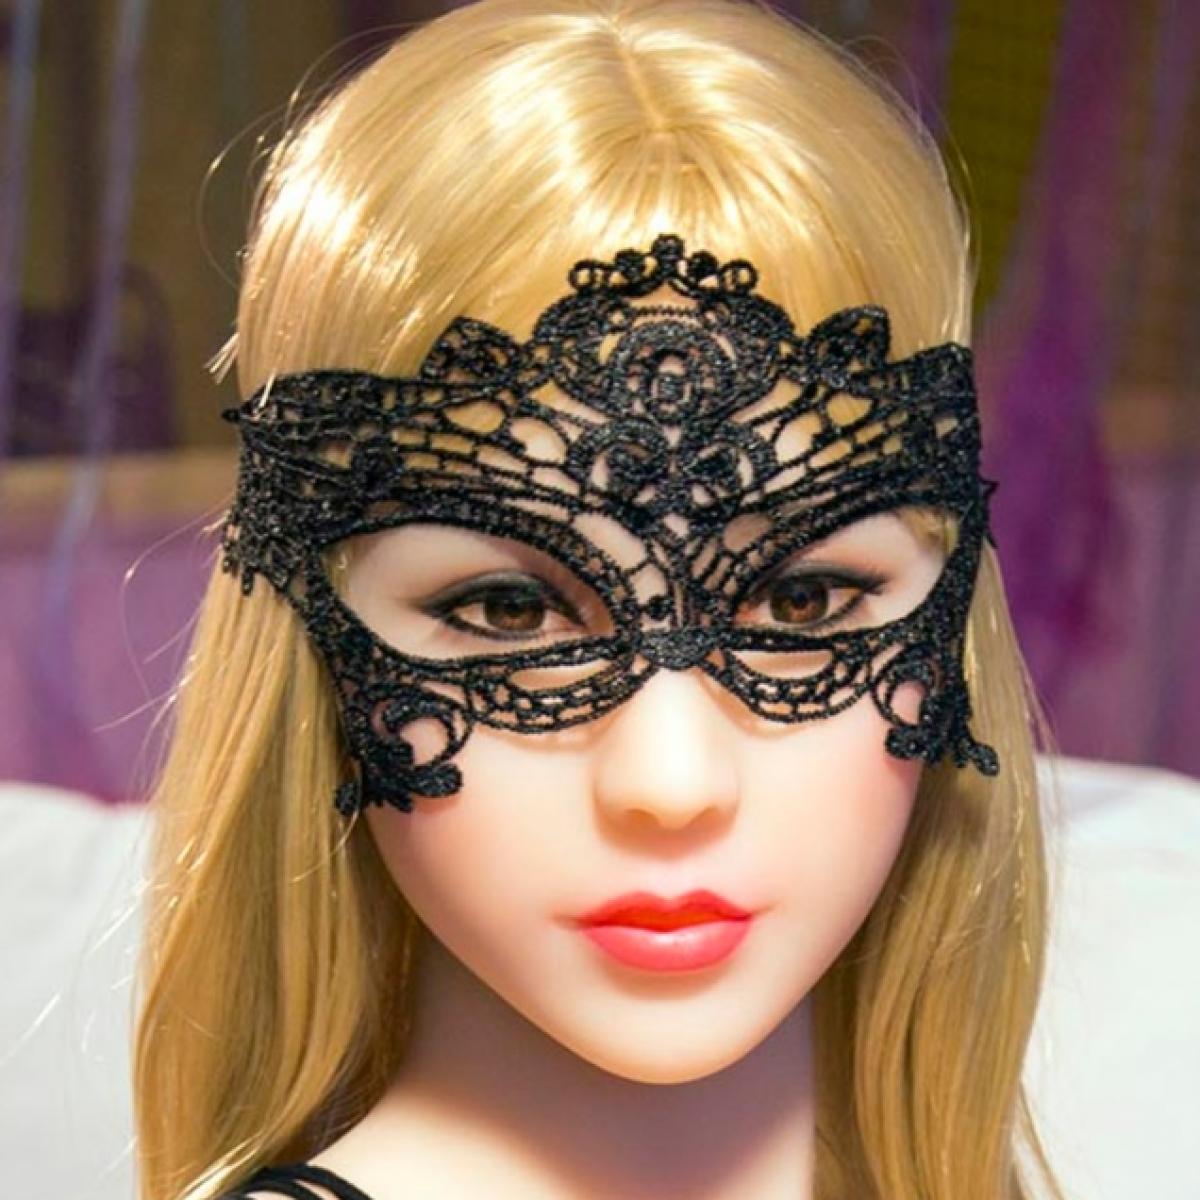 Firedoll - Carolina - Sex Doll Head - M16 Compatible - Natural